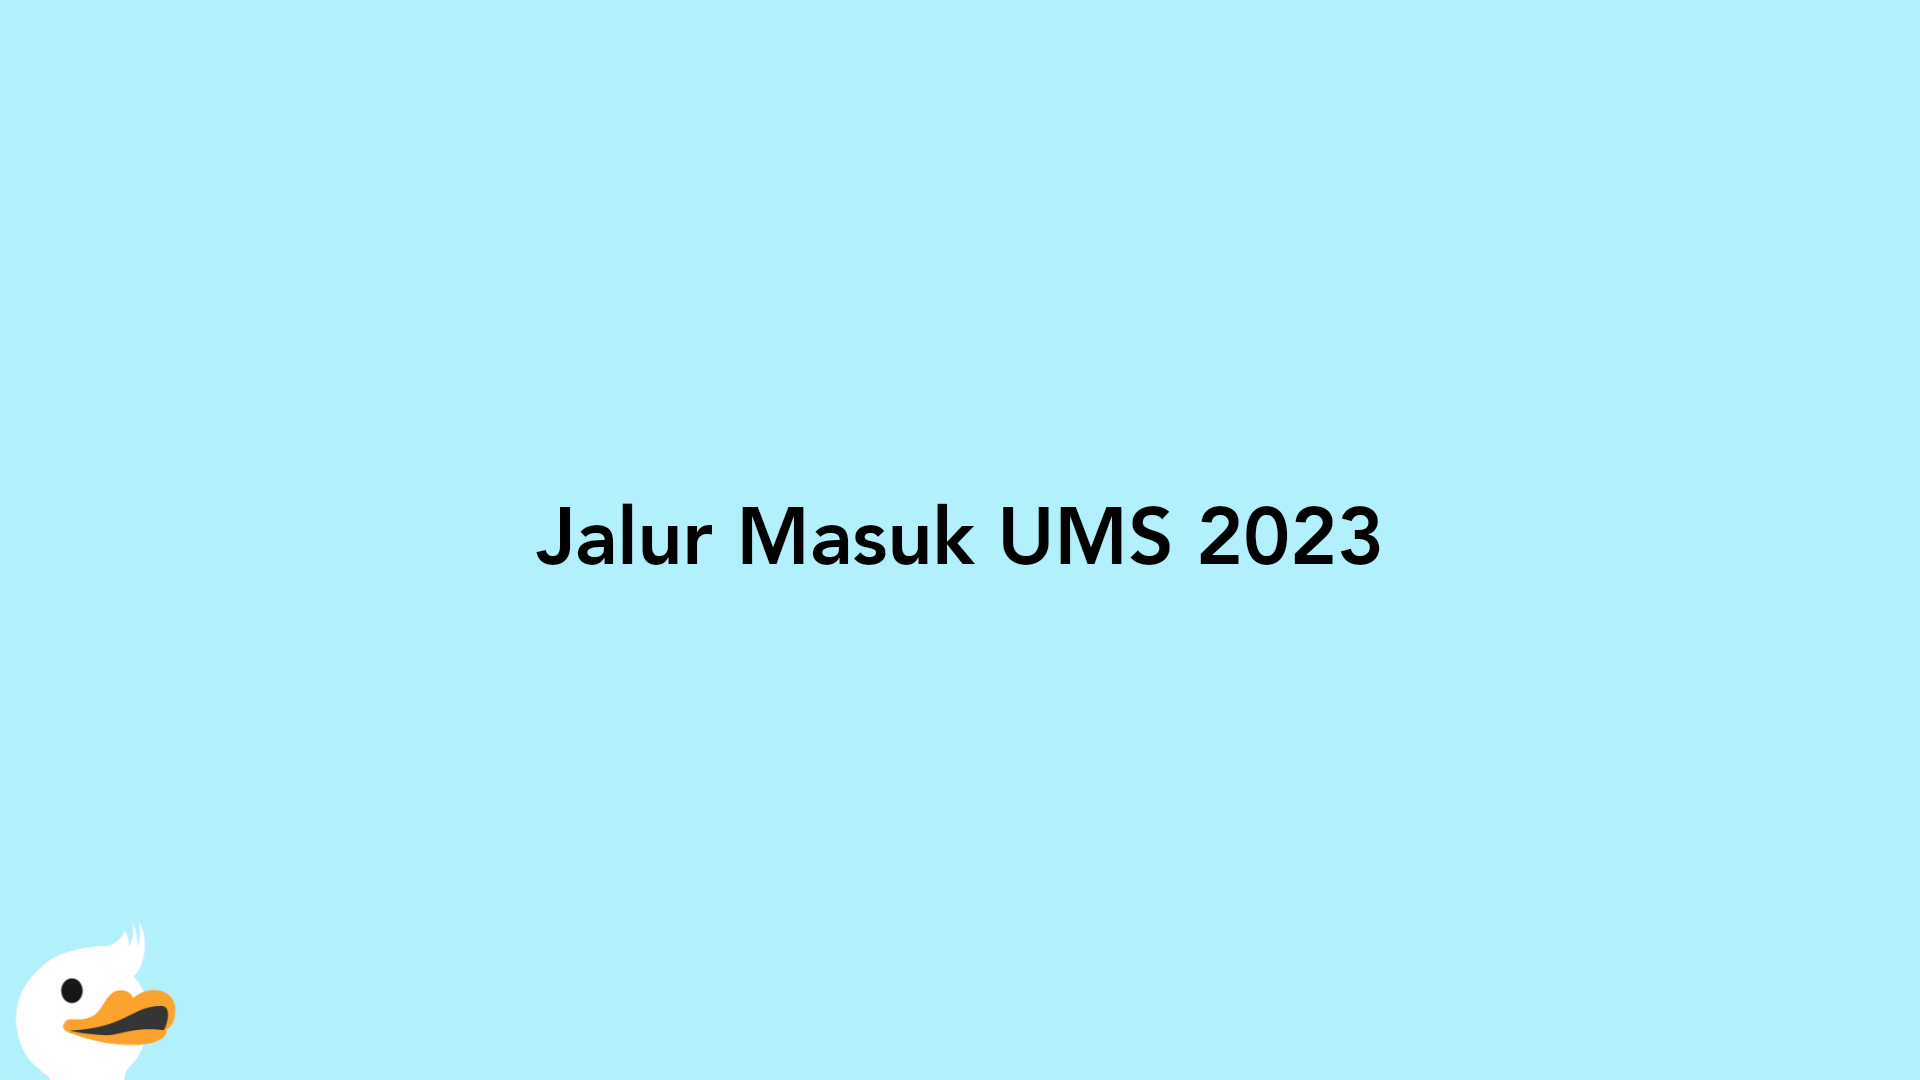 Jalur Masuk UMS 2023